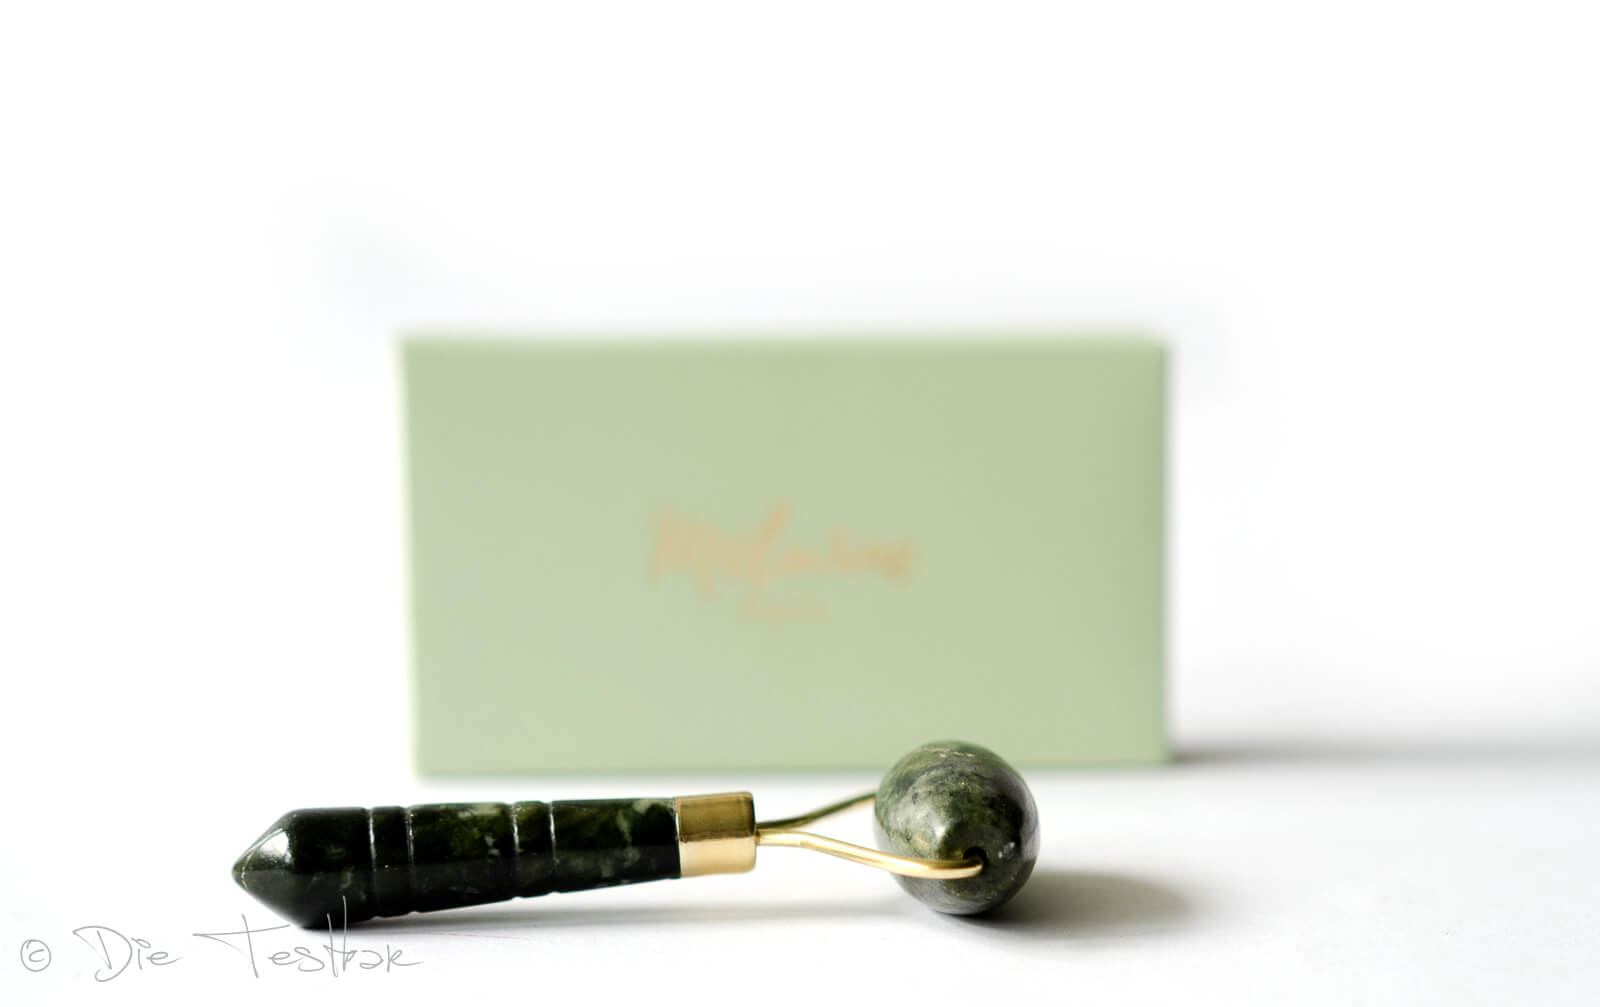 Melusine Cosmetics - The Jade Magic Roll-On